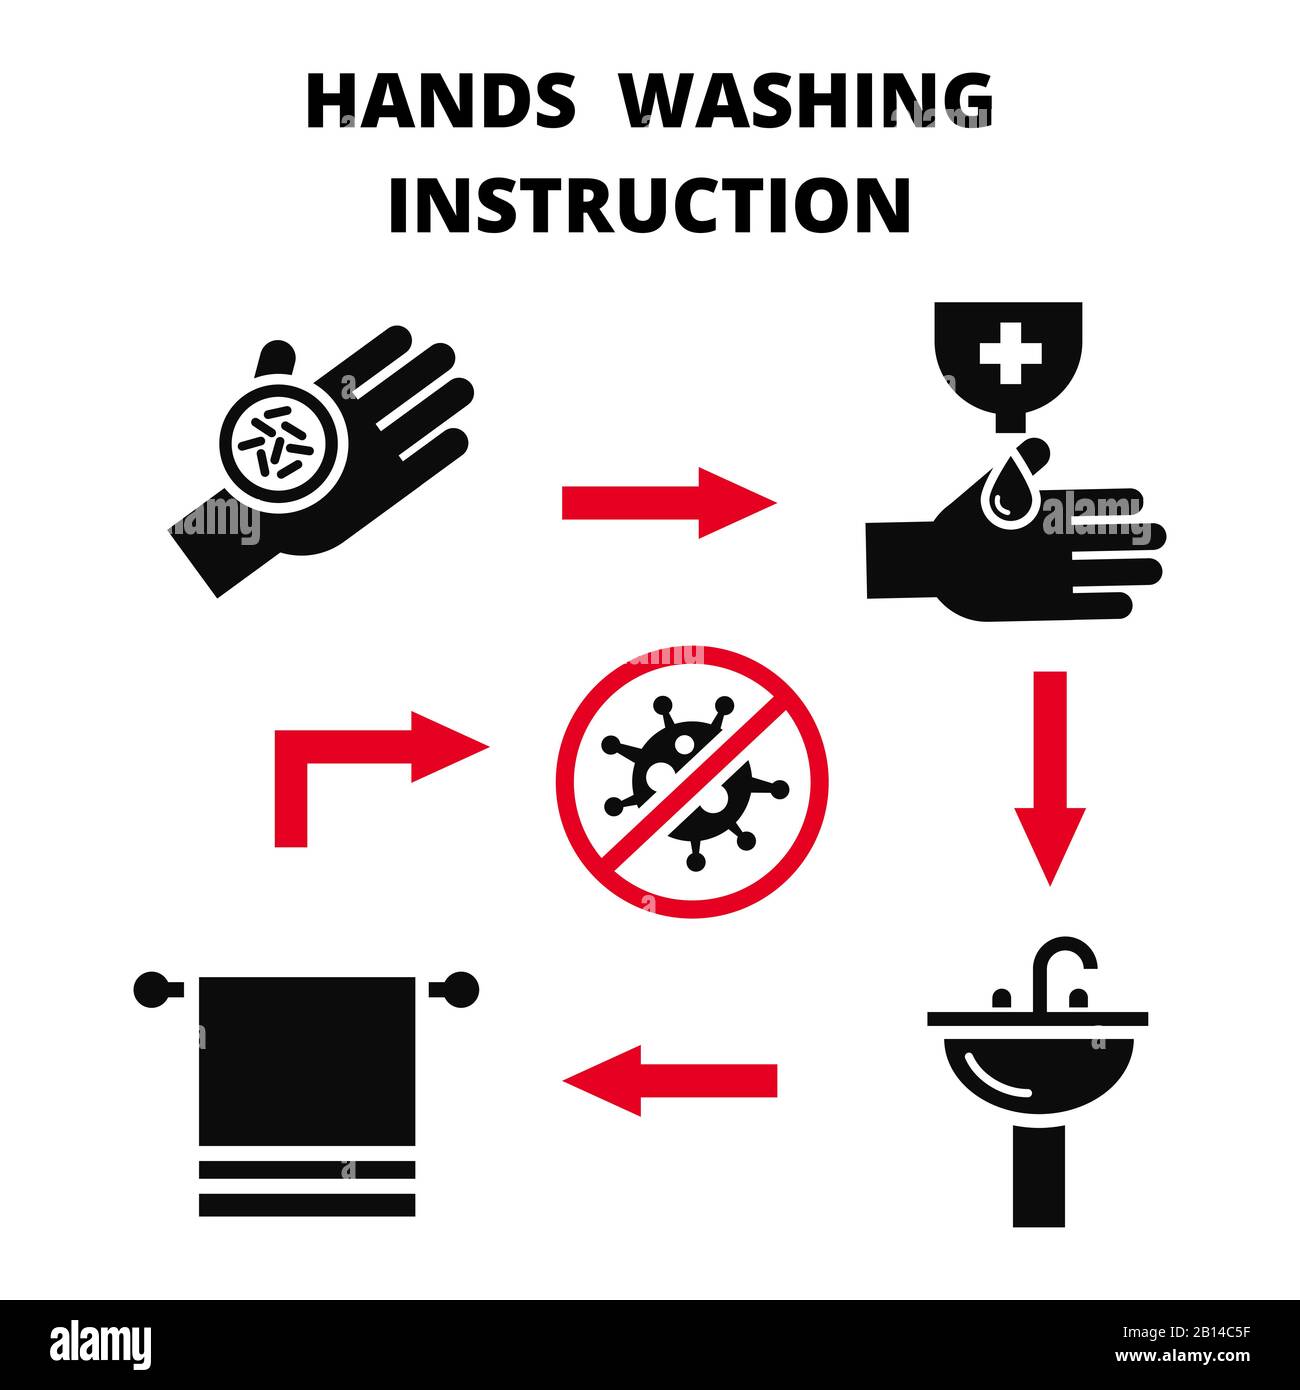 Hand washing instruction - hygiene concept. Hand hygienic symbol, vector illustration Stock Vector